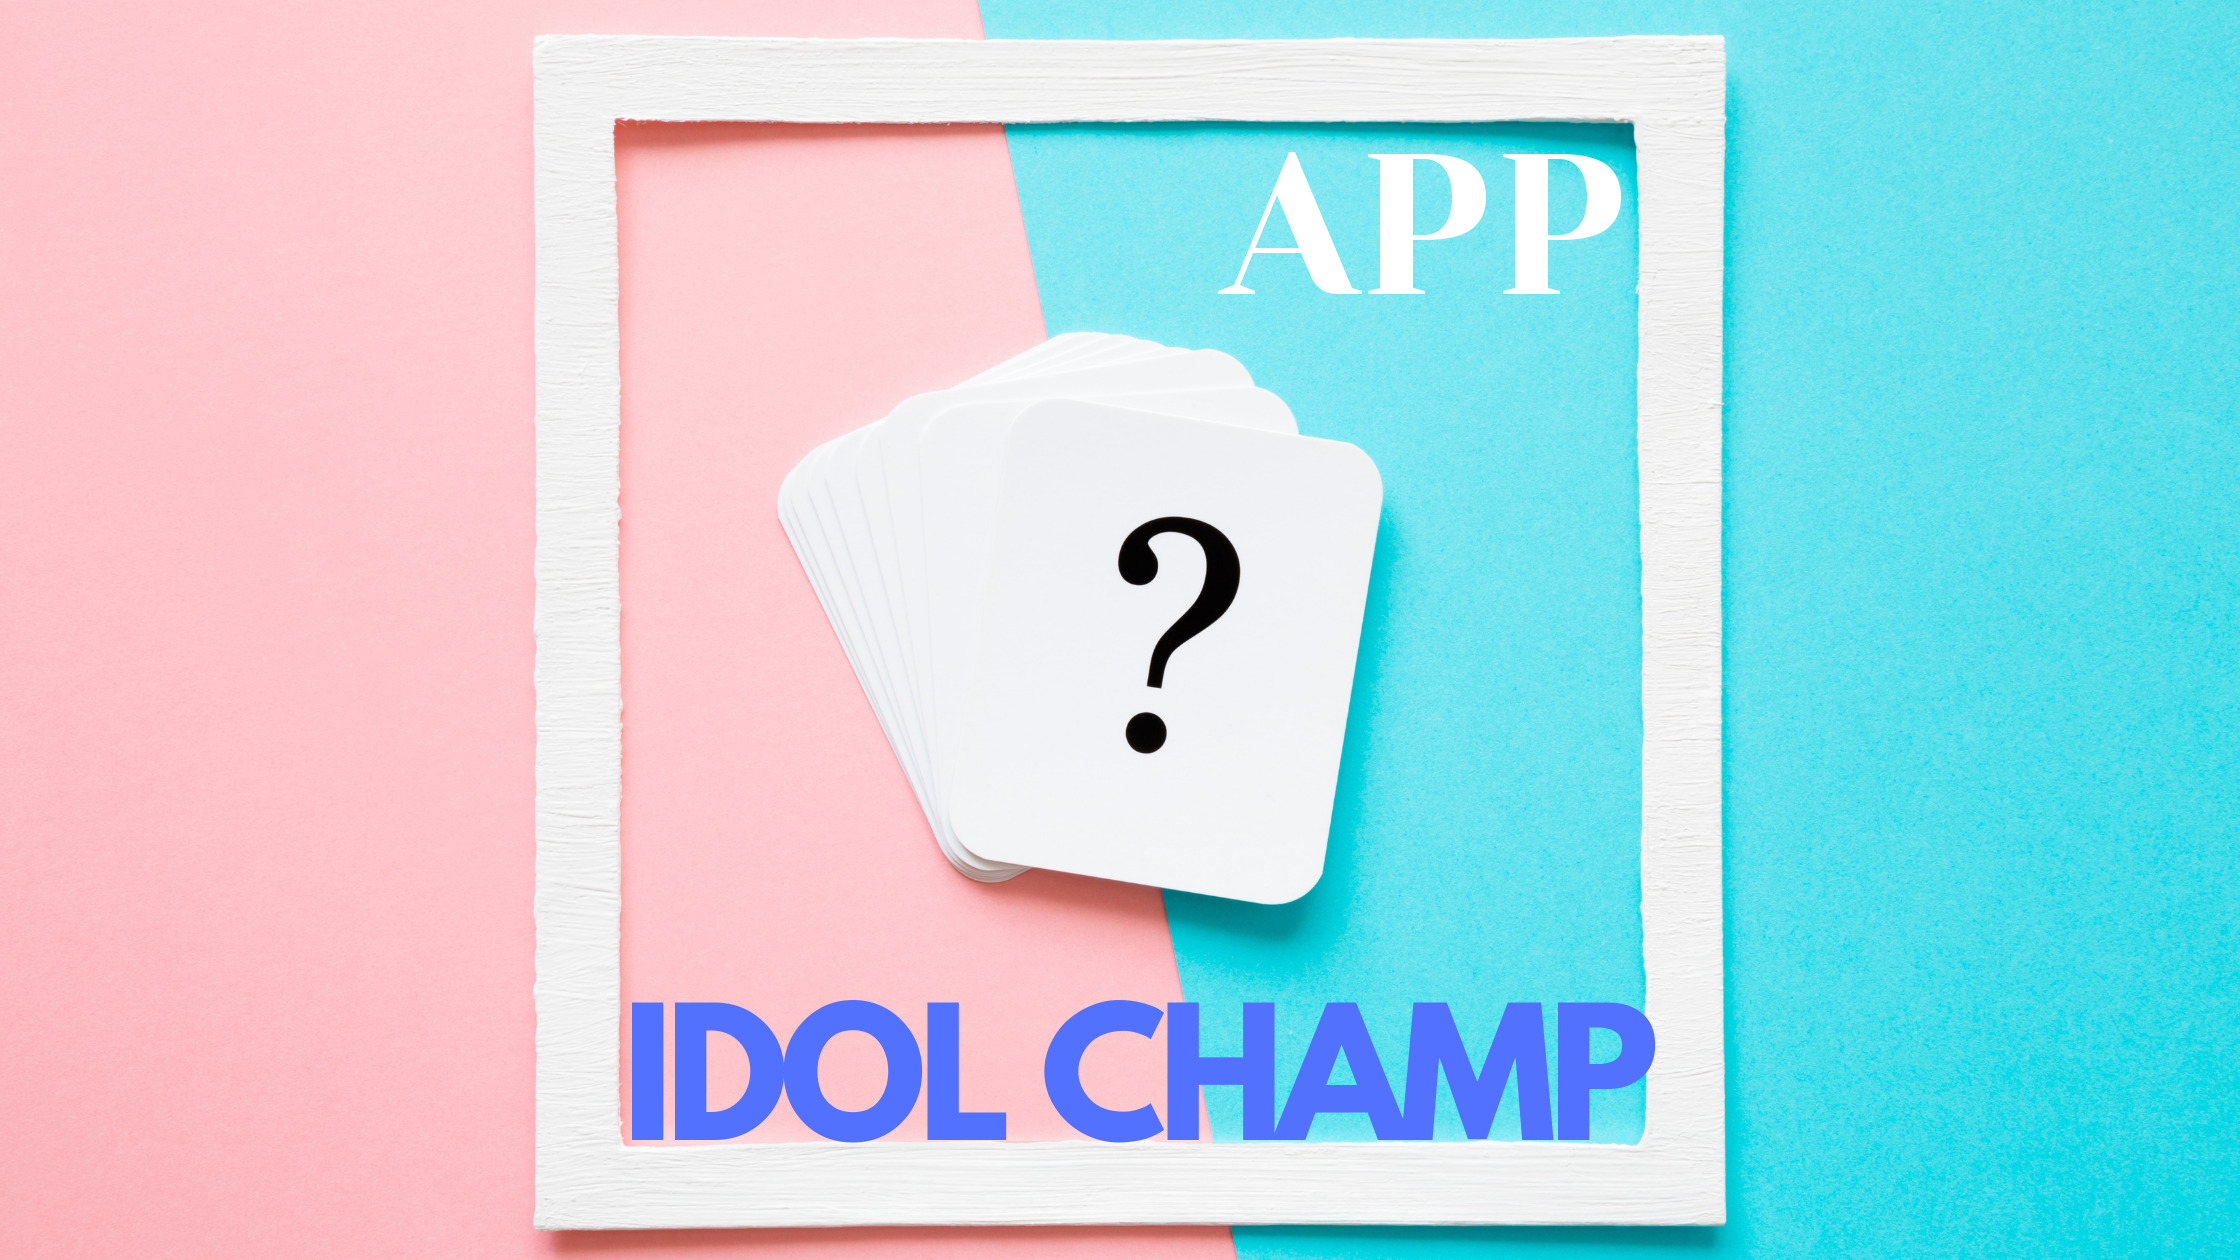 usa idol champ app